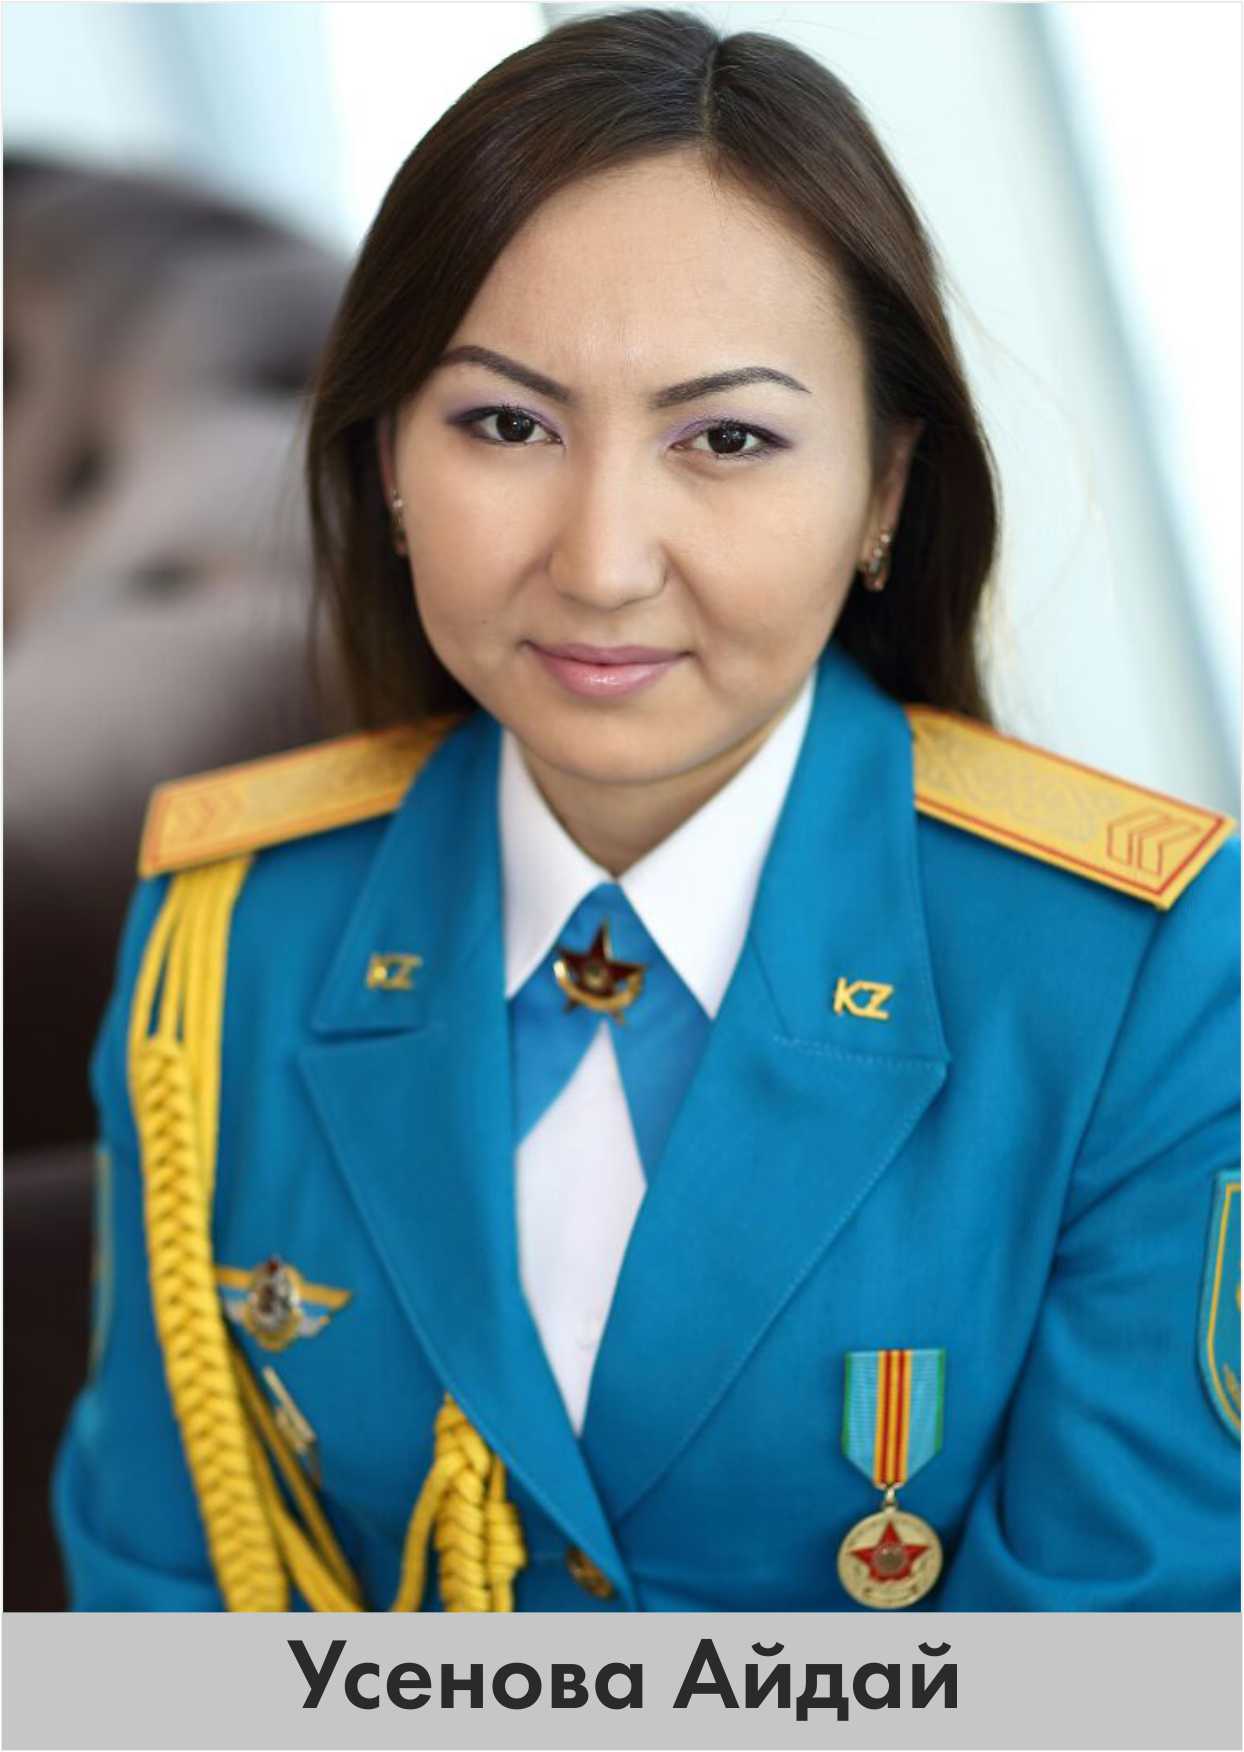 Военная форма казахстана. Усенова айдай. Полиция Казахстана женщины. Форма женская Военная в Казахстане.